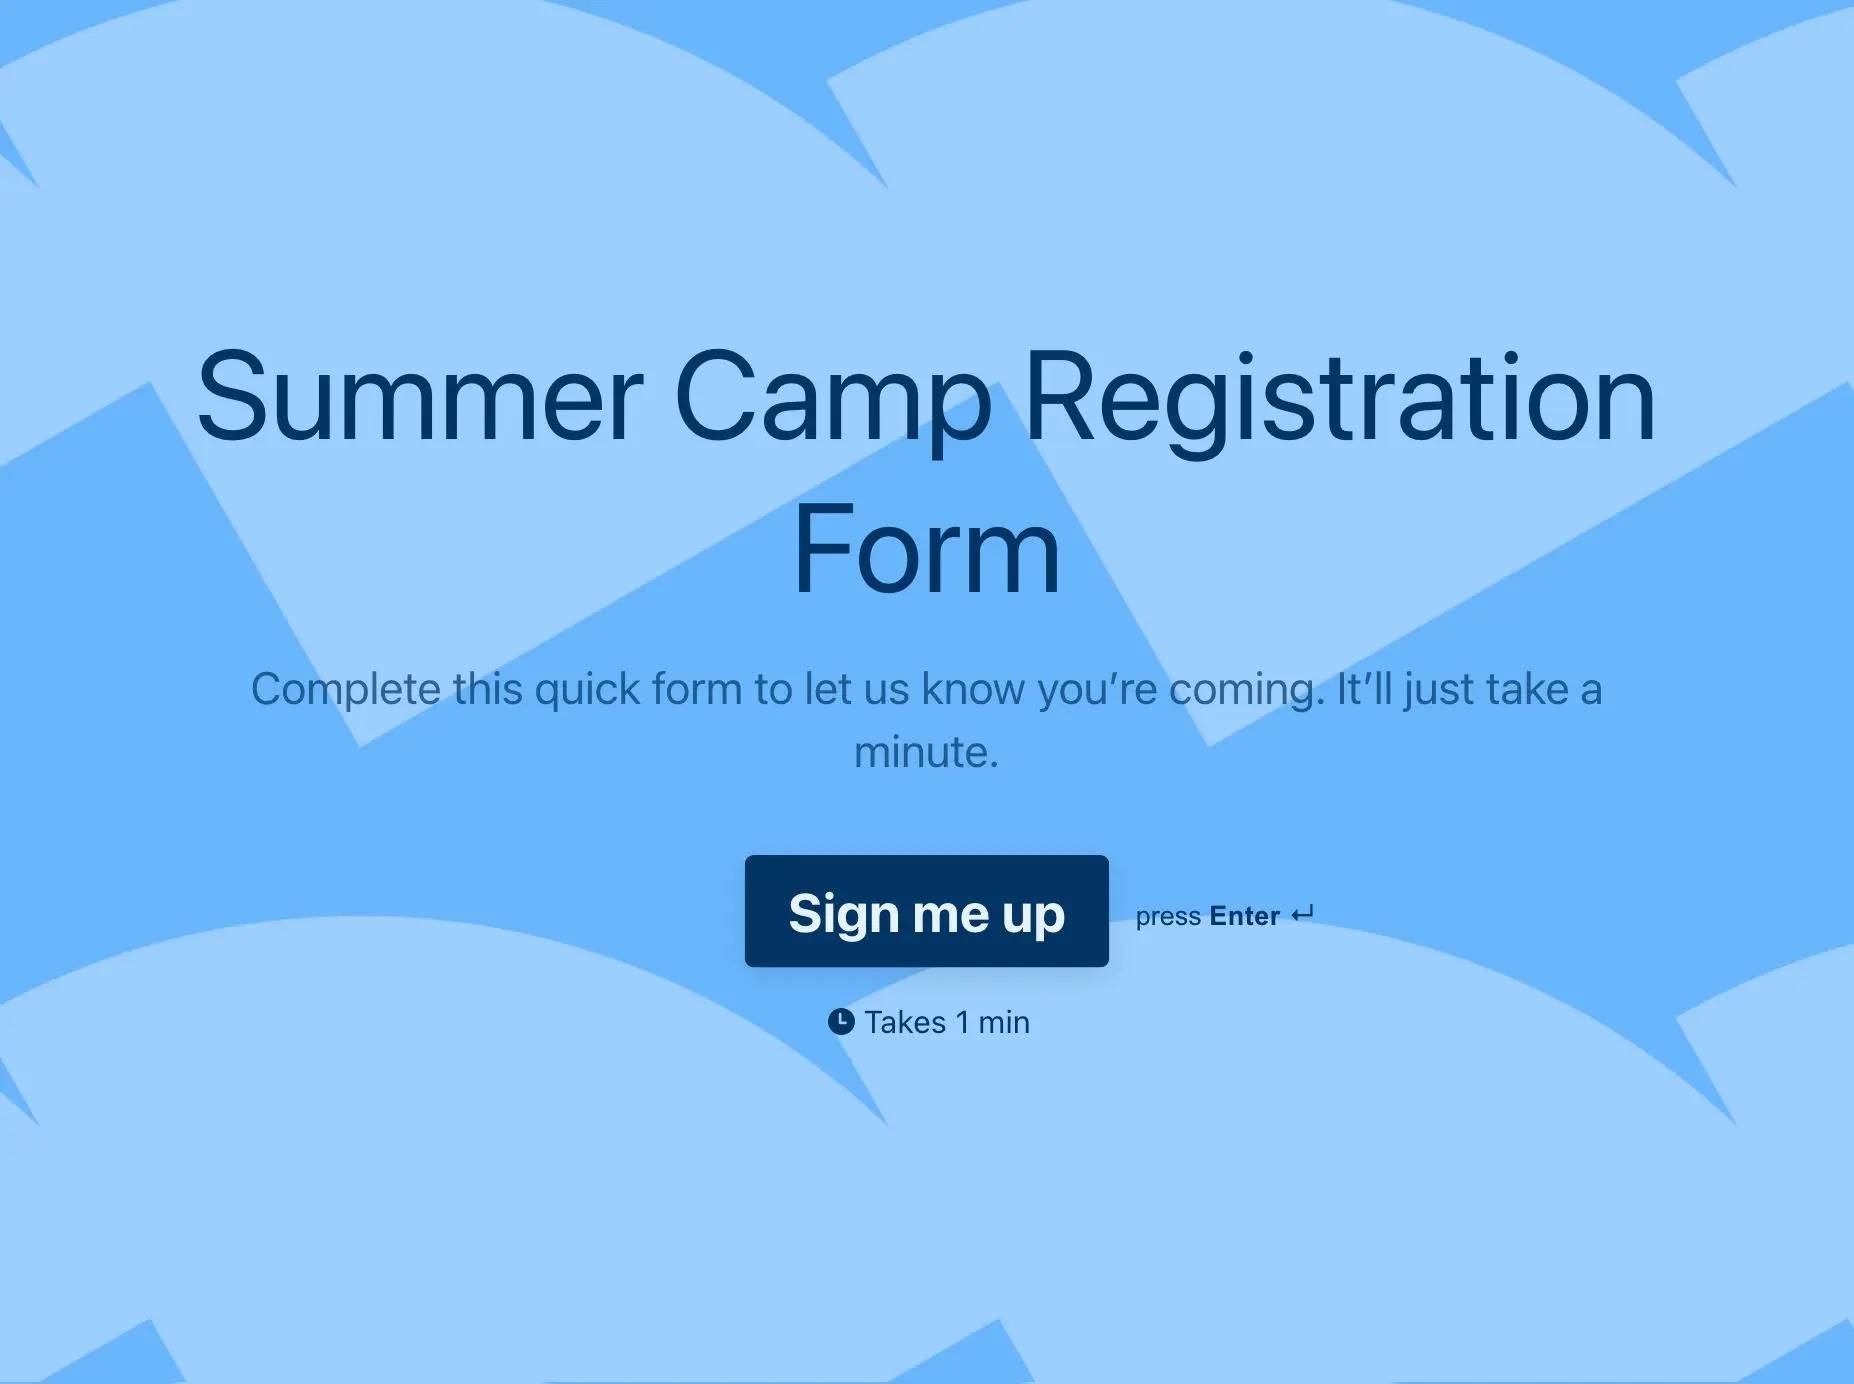 Summer Camp Registration Form Template Hero